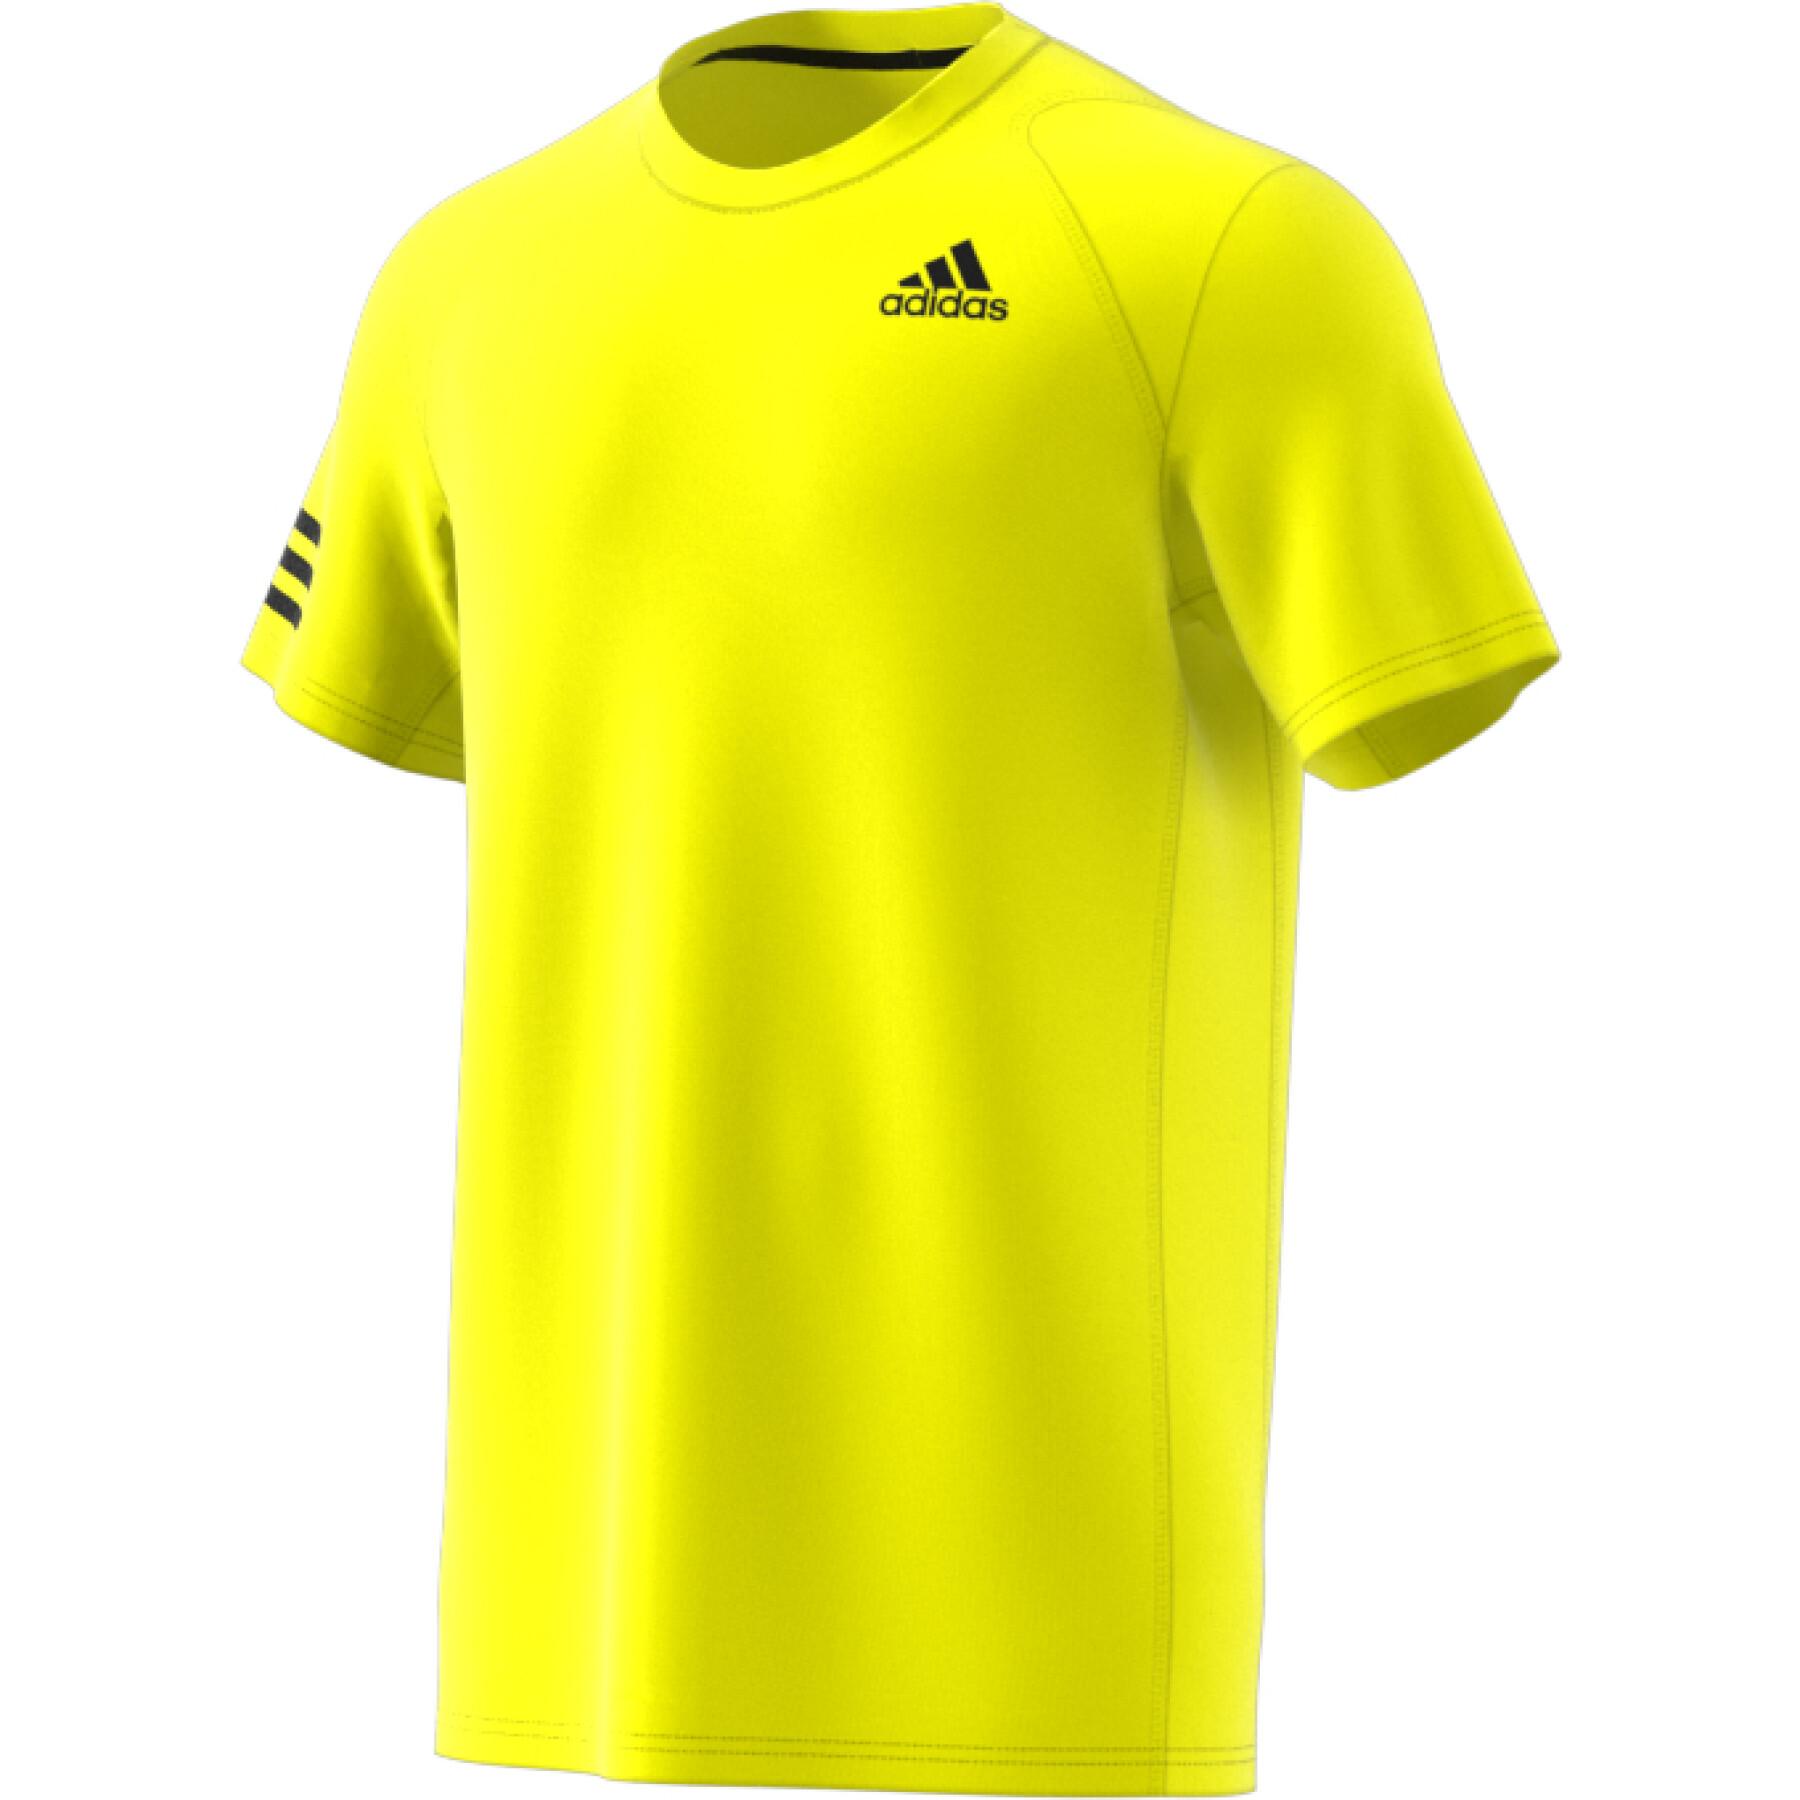 Tennis club jersey with 3 stripes adidas